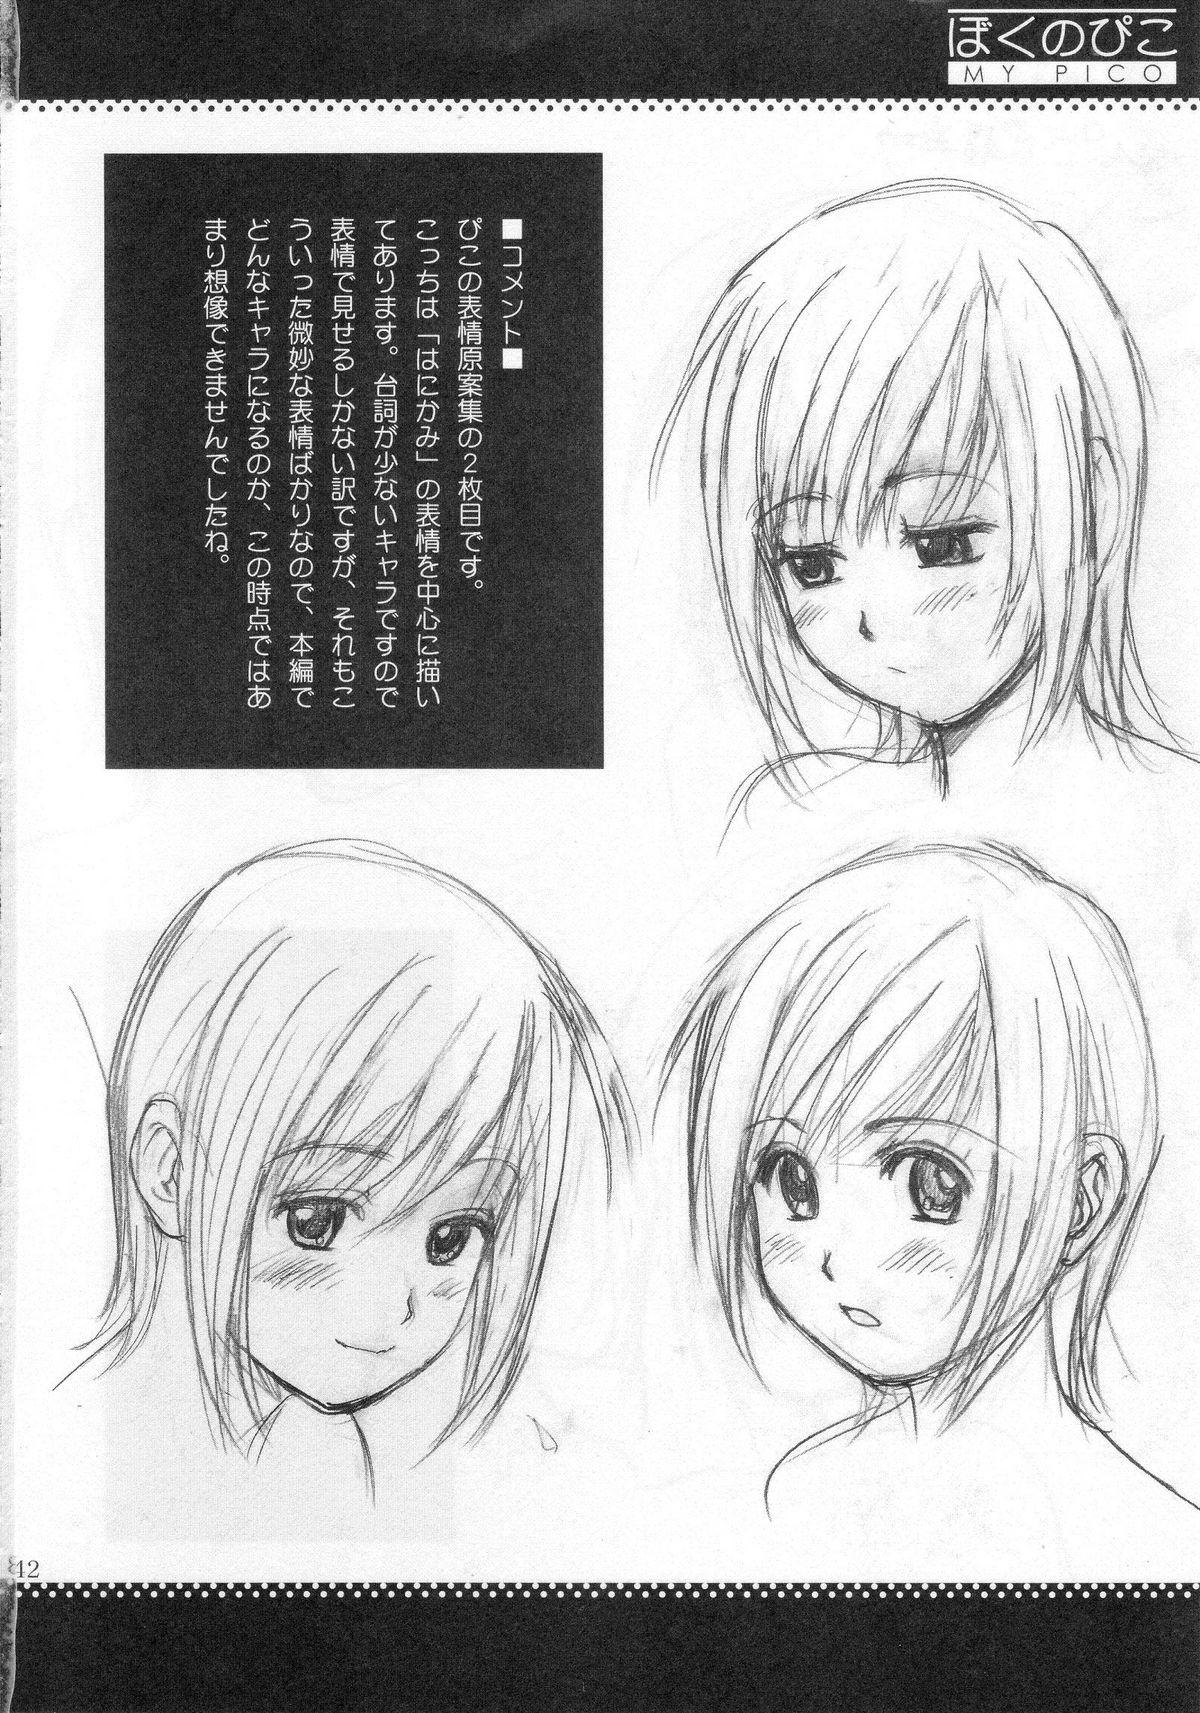 Boku no Pico Comic + Koushiki Character Genanshuu 39